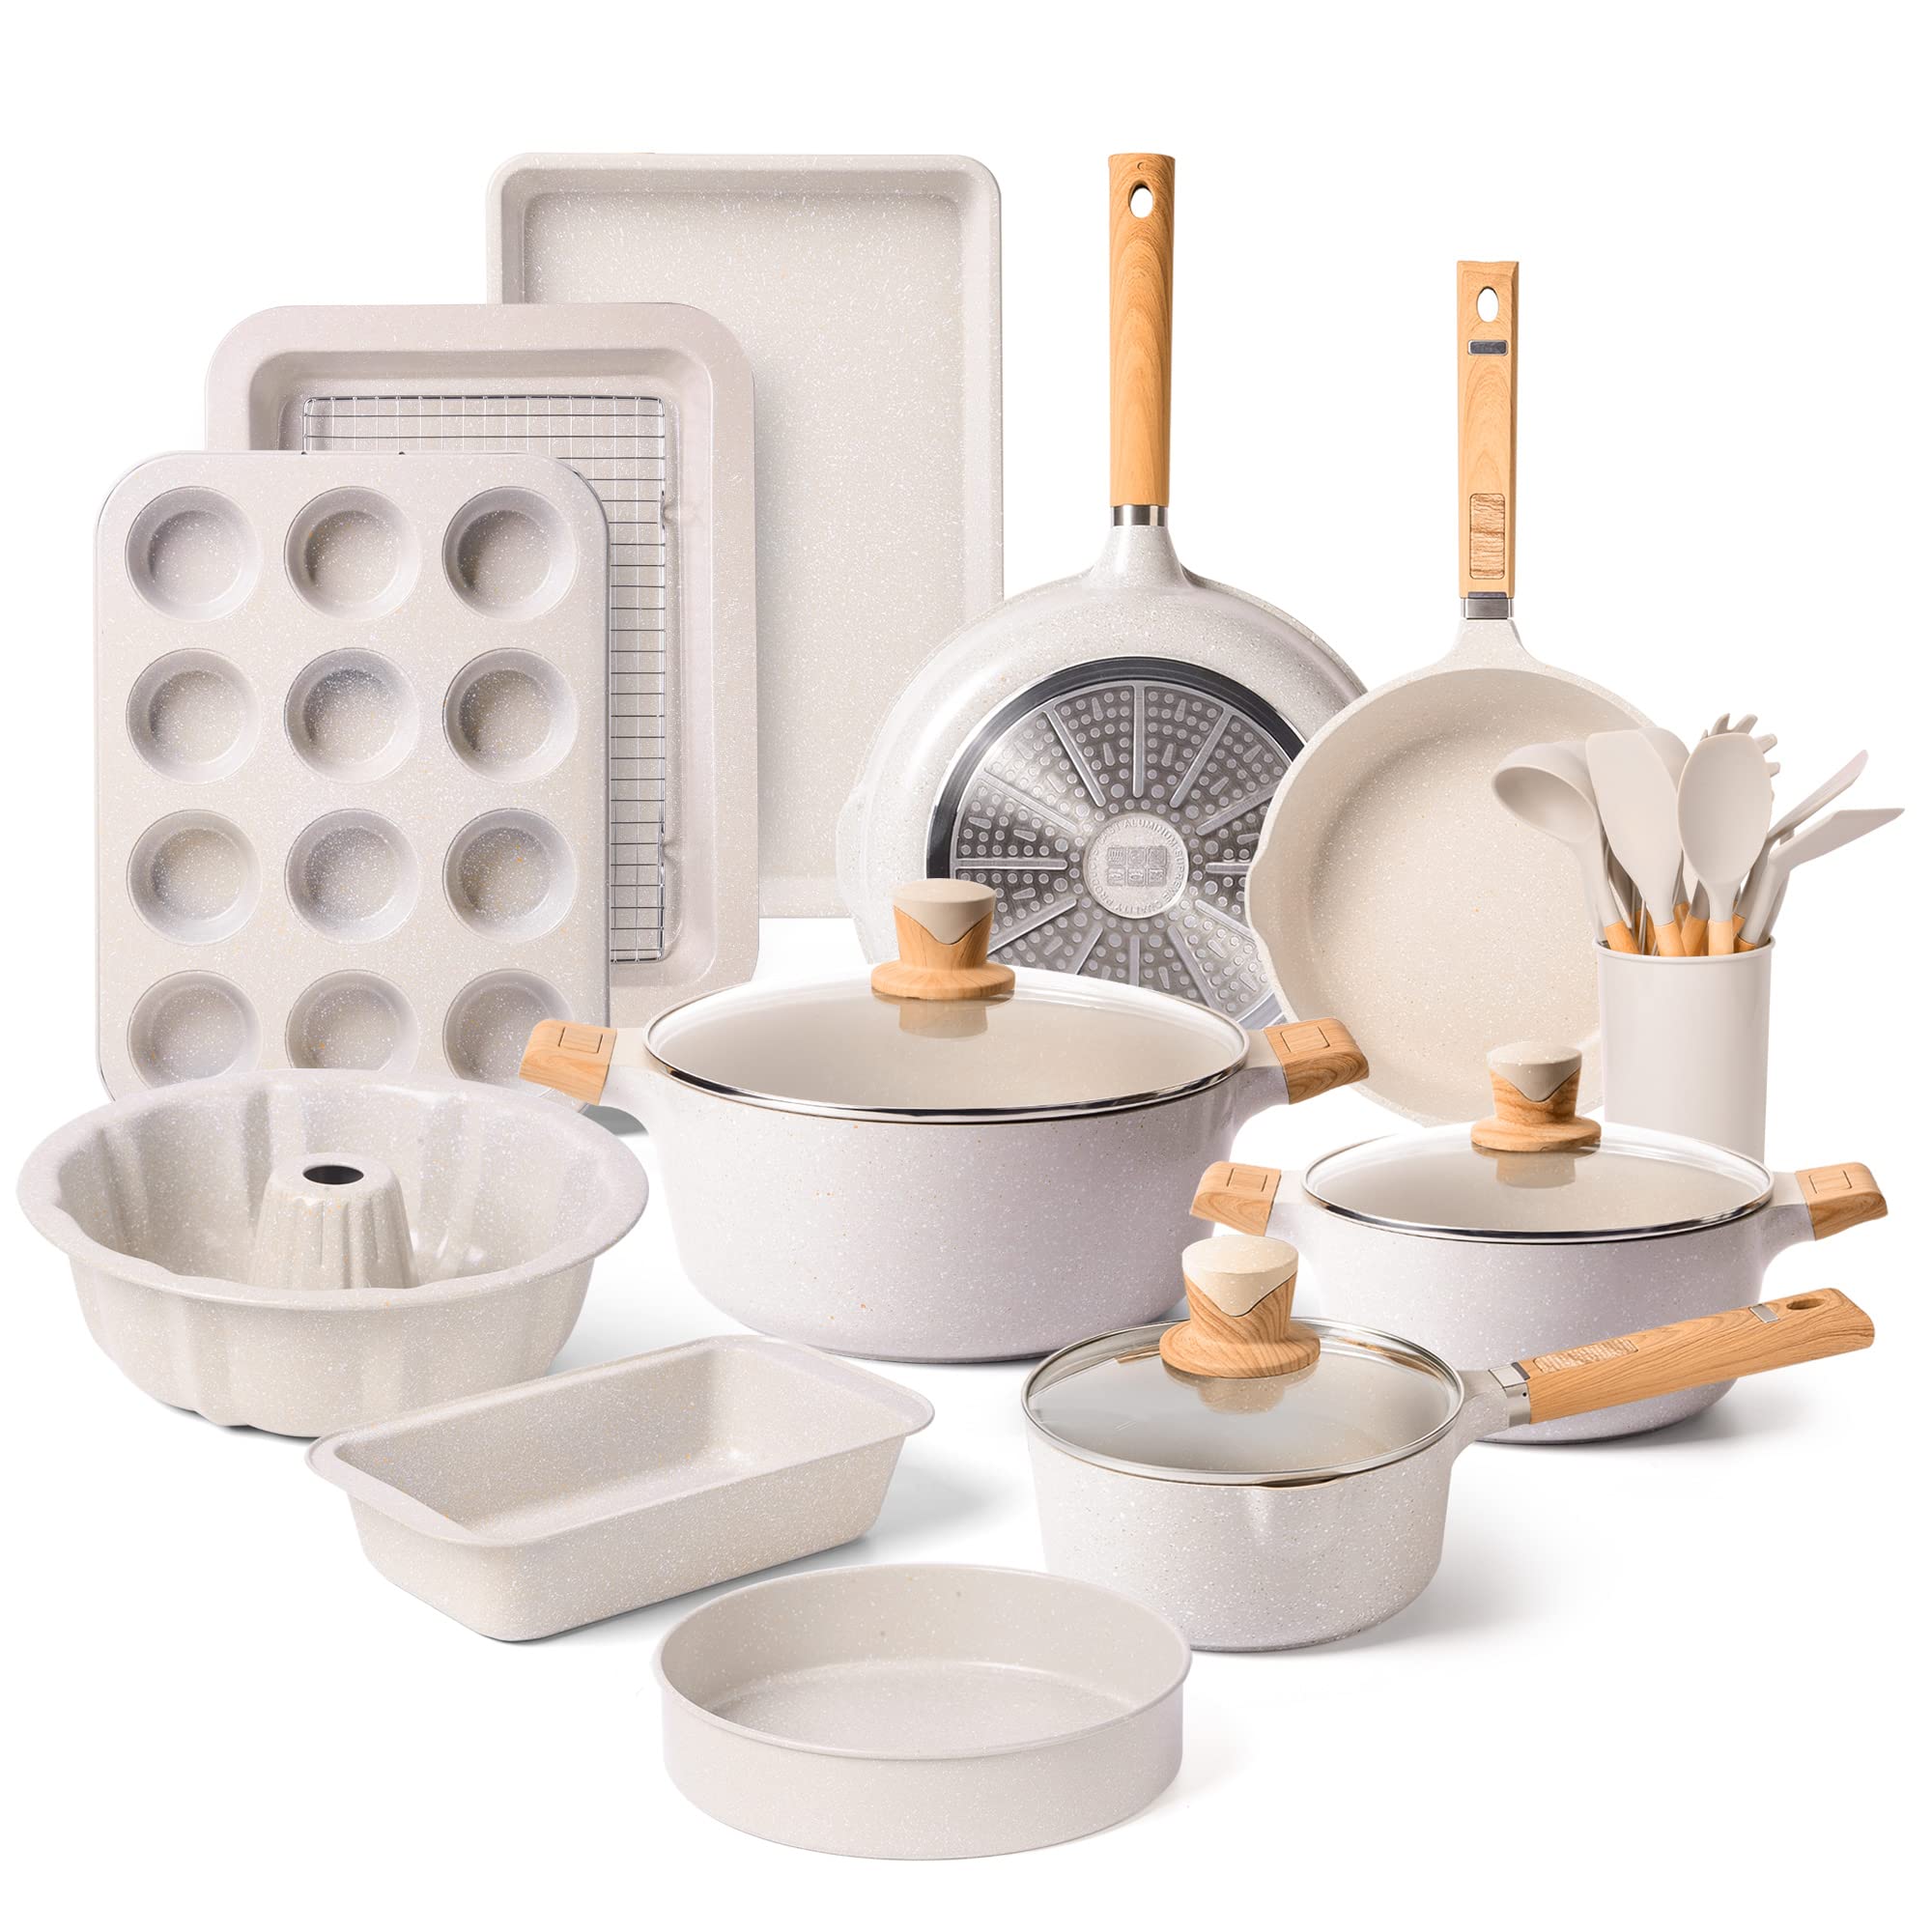 VONIKI Cookware and Bakeware Set